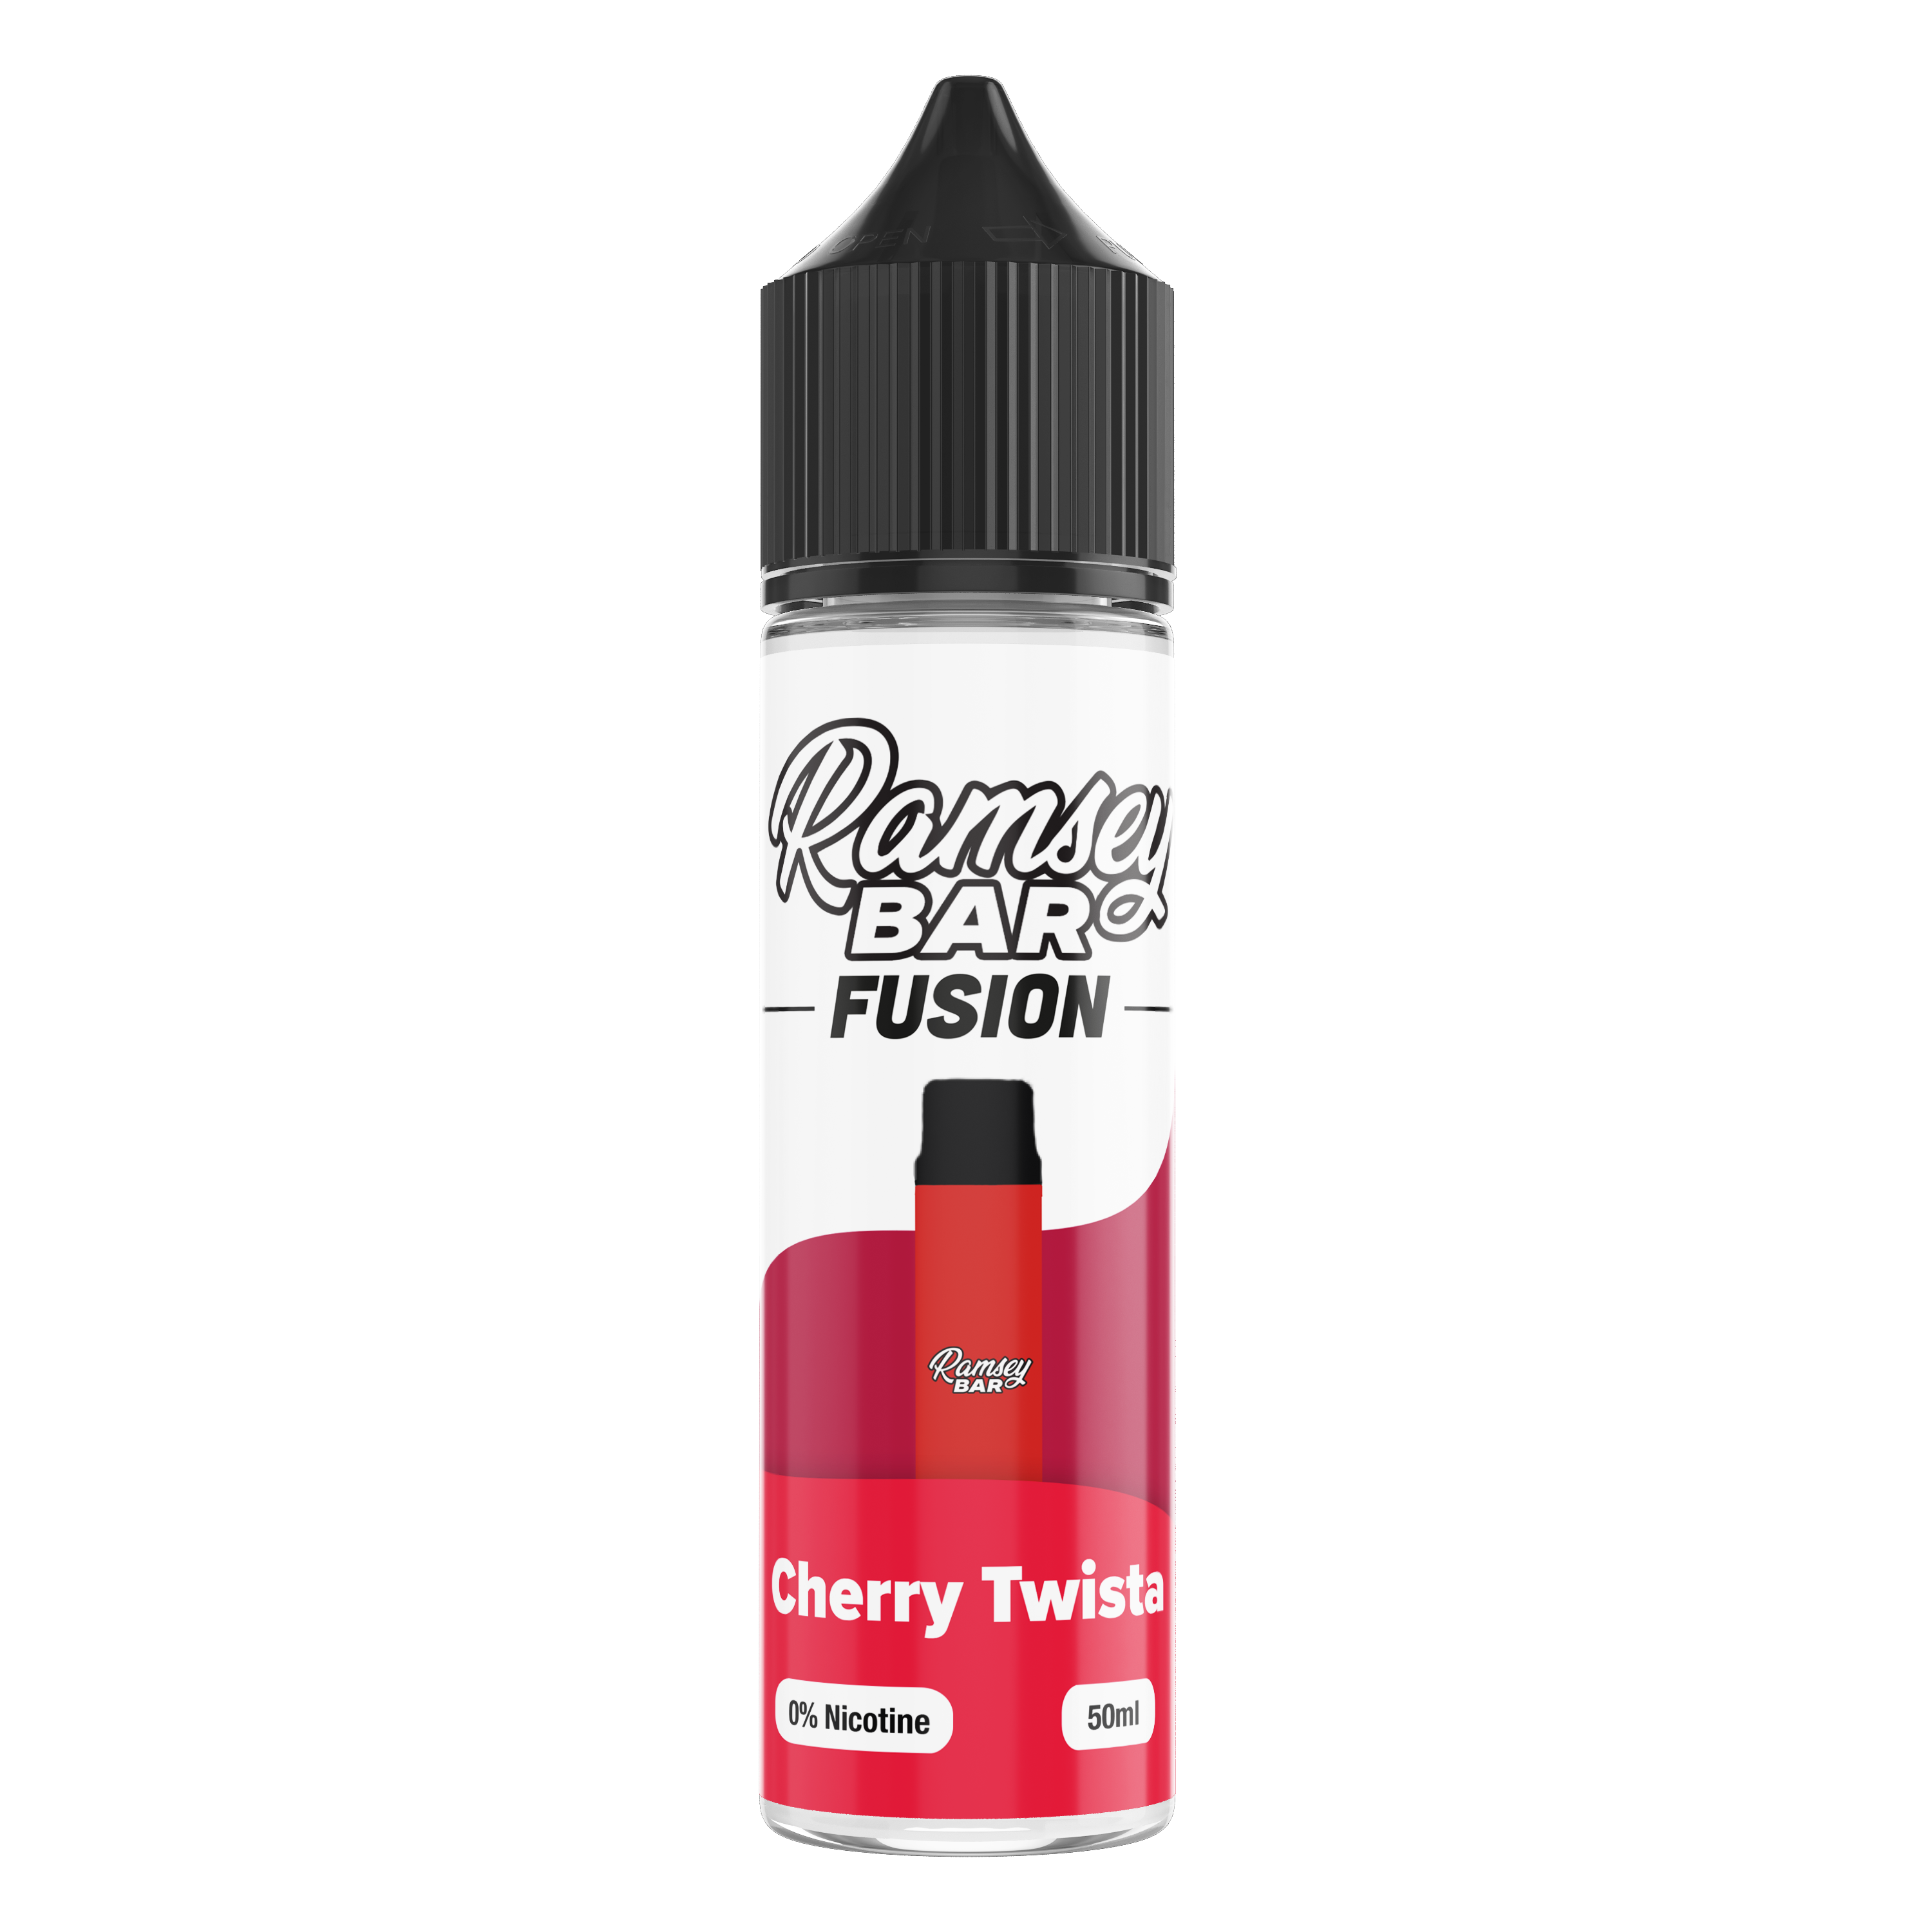 Ramsey Bar Fusion Cherry Twista 50ml Shortfill E-Liquid